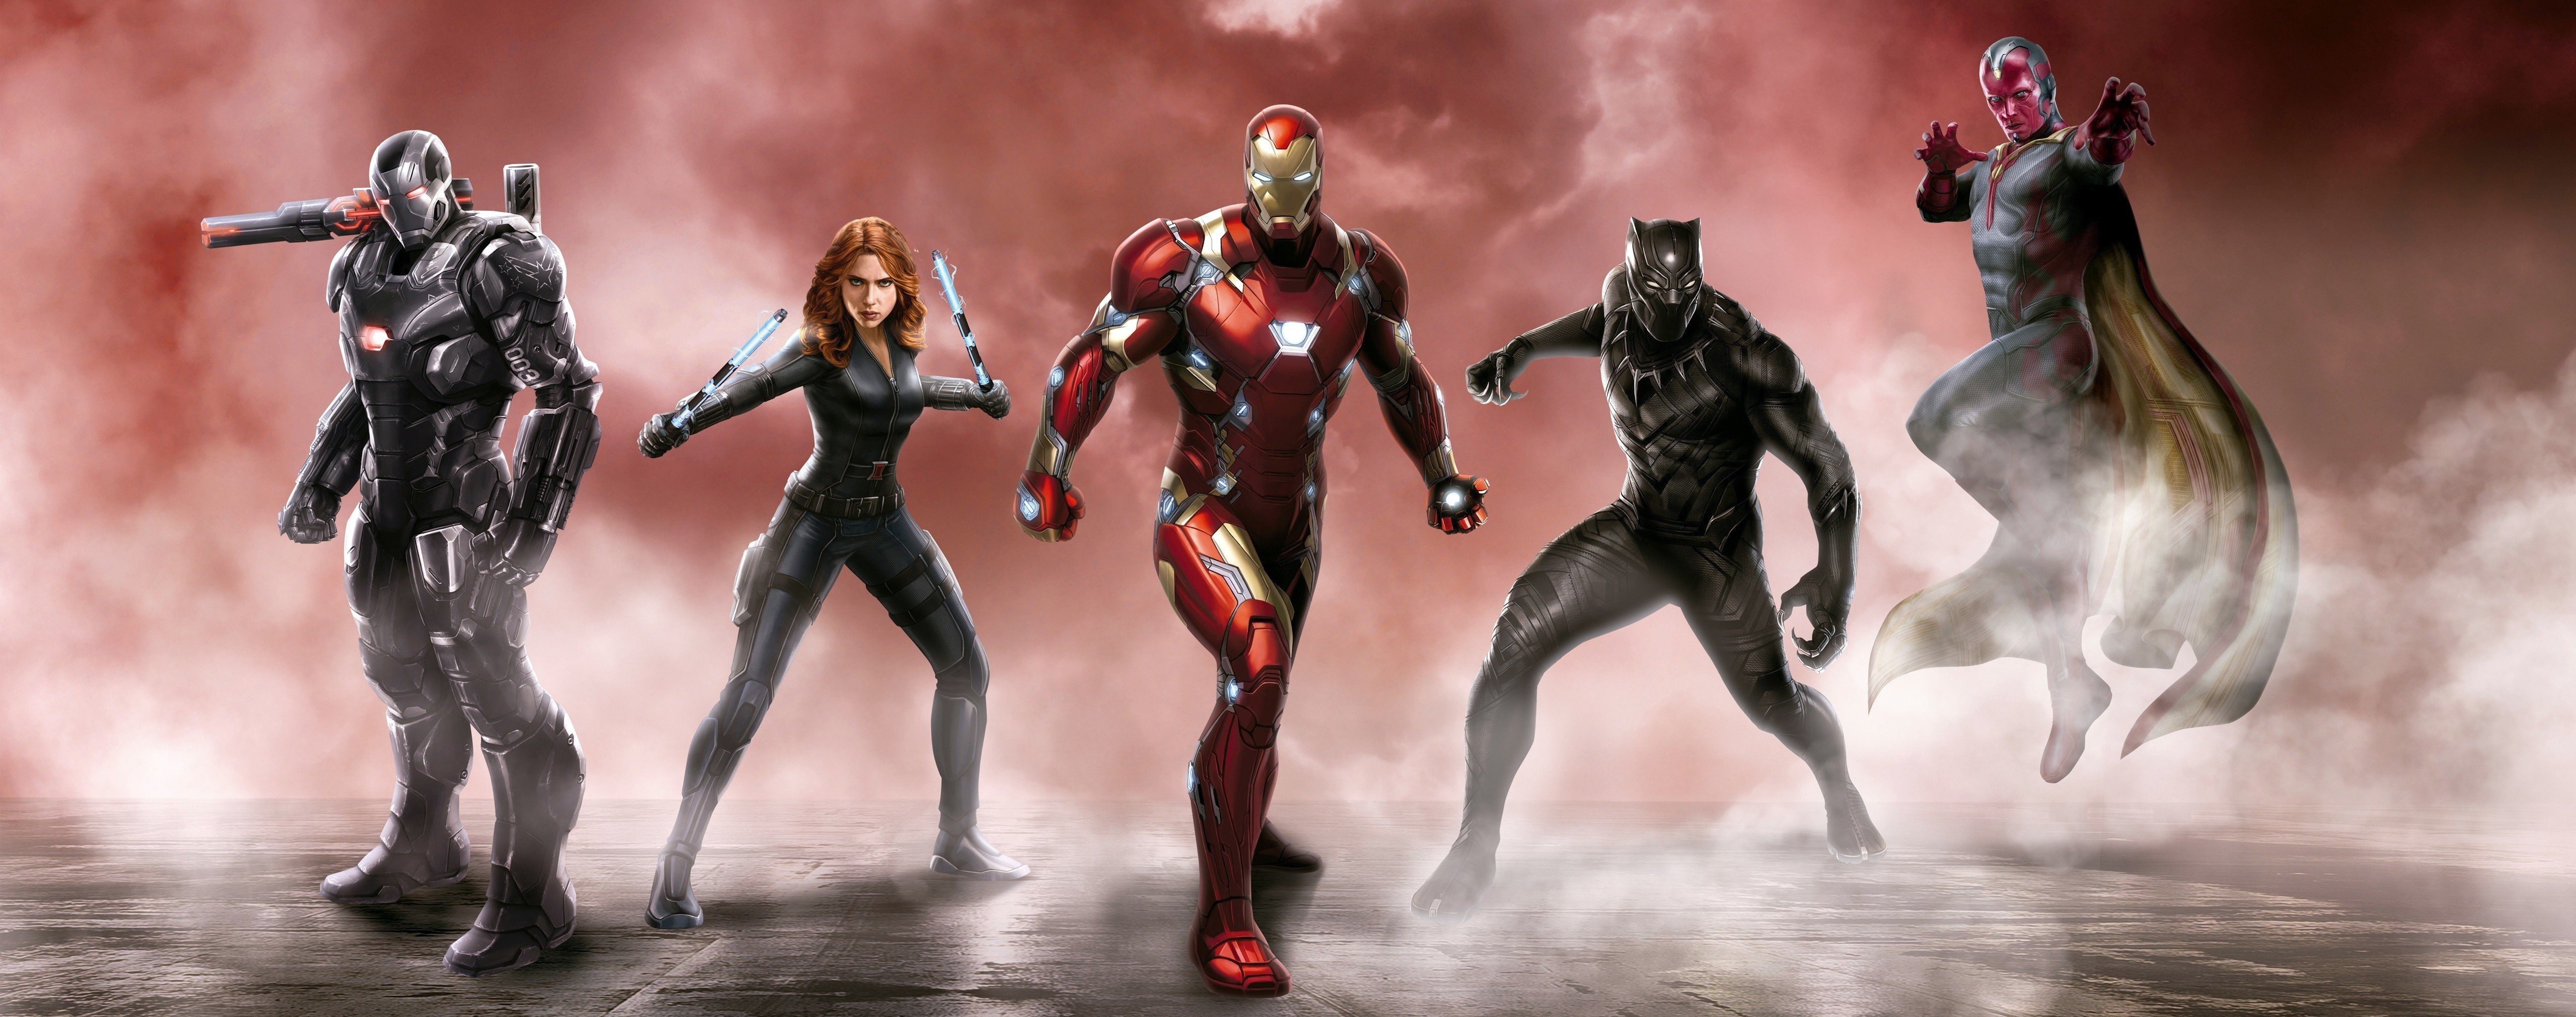 Iron Man Artwork Digital Art Black Widow The Vision Black Panther War Machine Captain America Civil  5117x2021